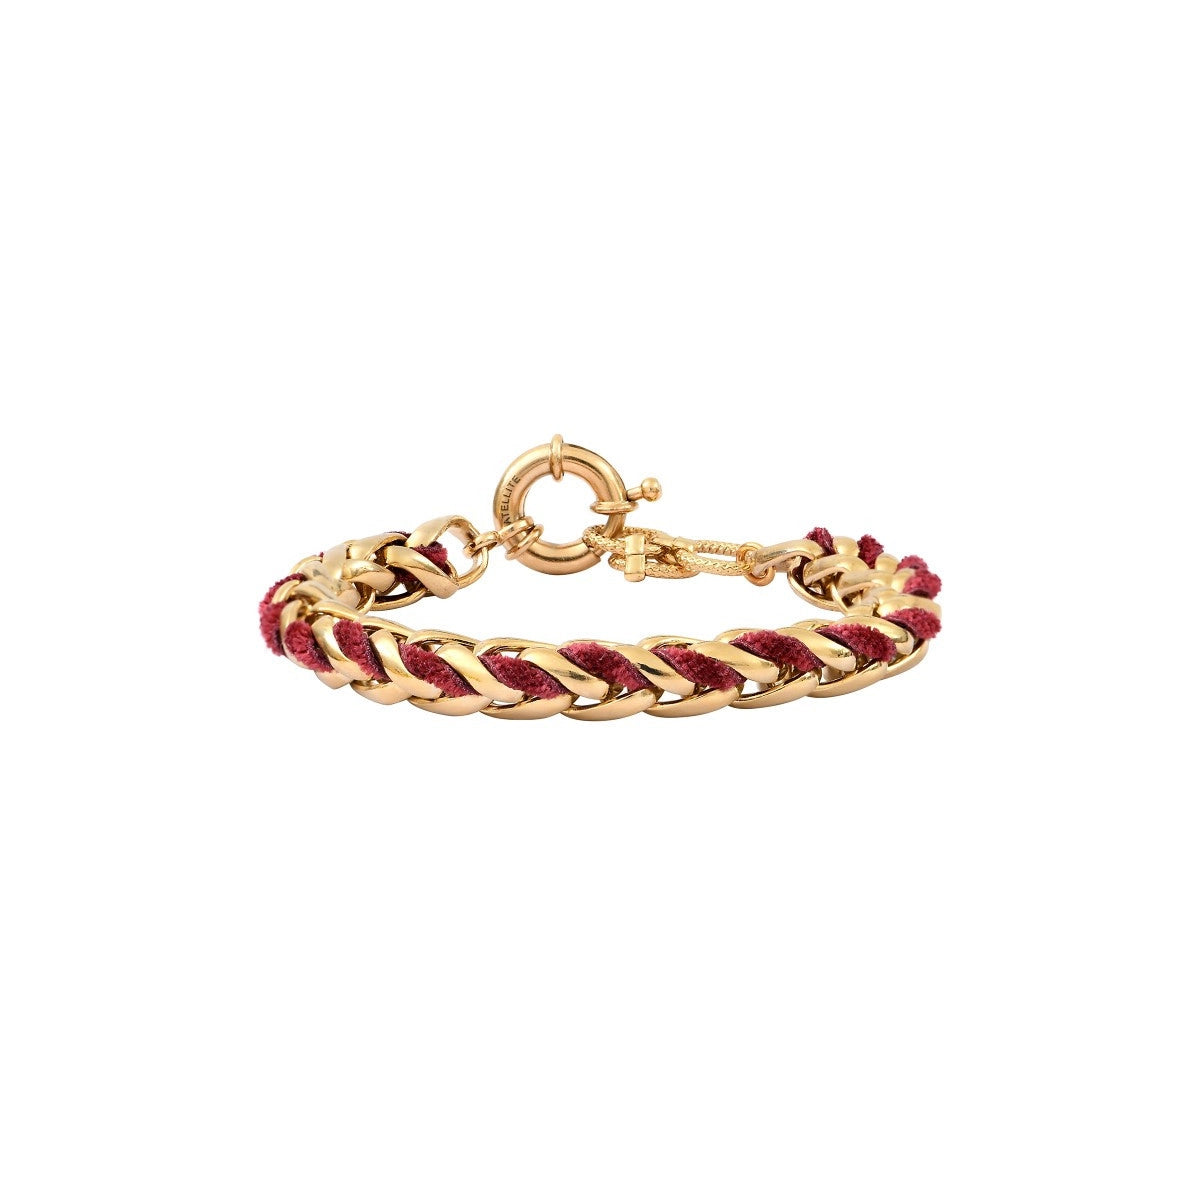 Glamorous red velvet and gold-plated metal adjustable chain bracelet